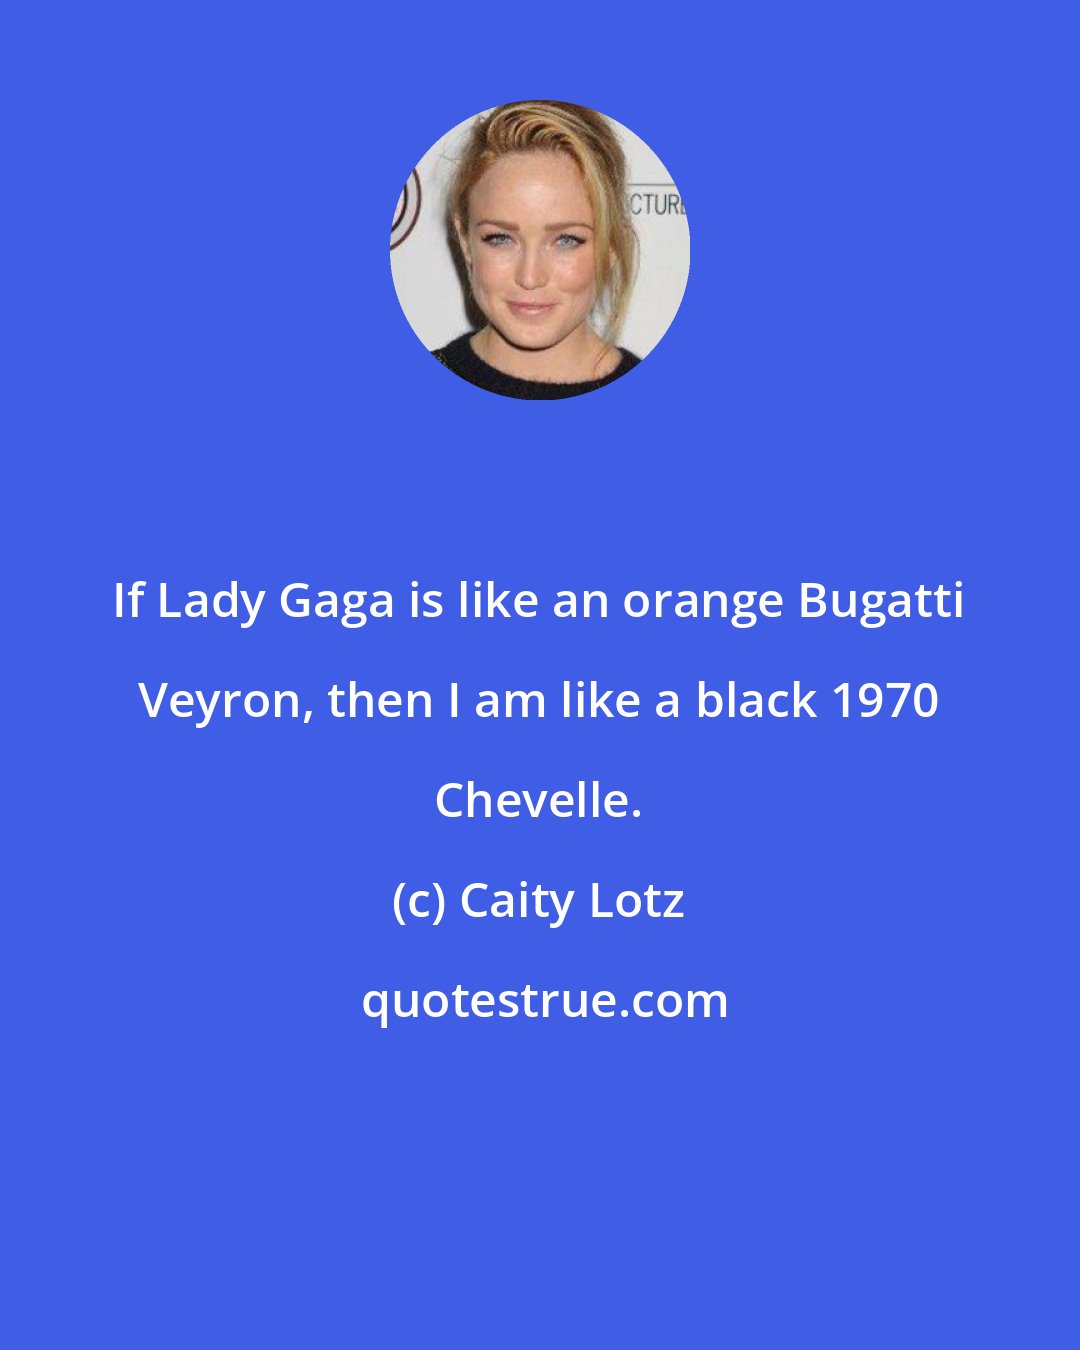 Caity Lotz: If Lady Gaga is like an orange Bugatti Veyron, then I am like a black 1970 Chevelle.